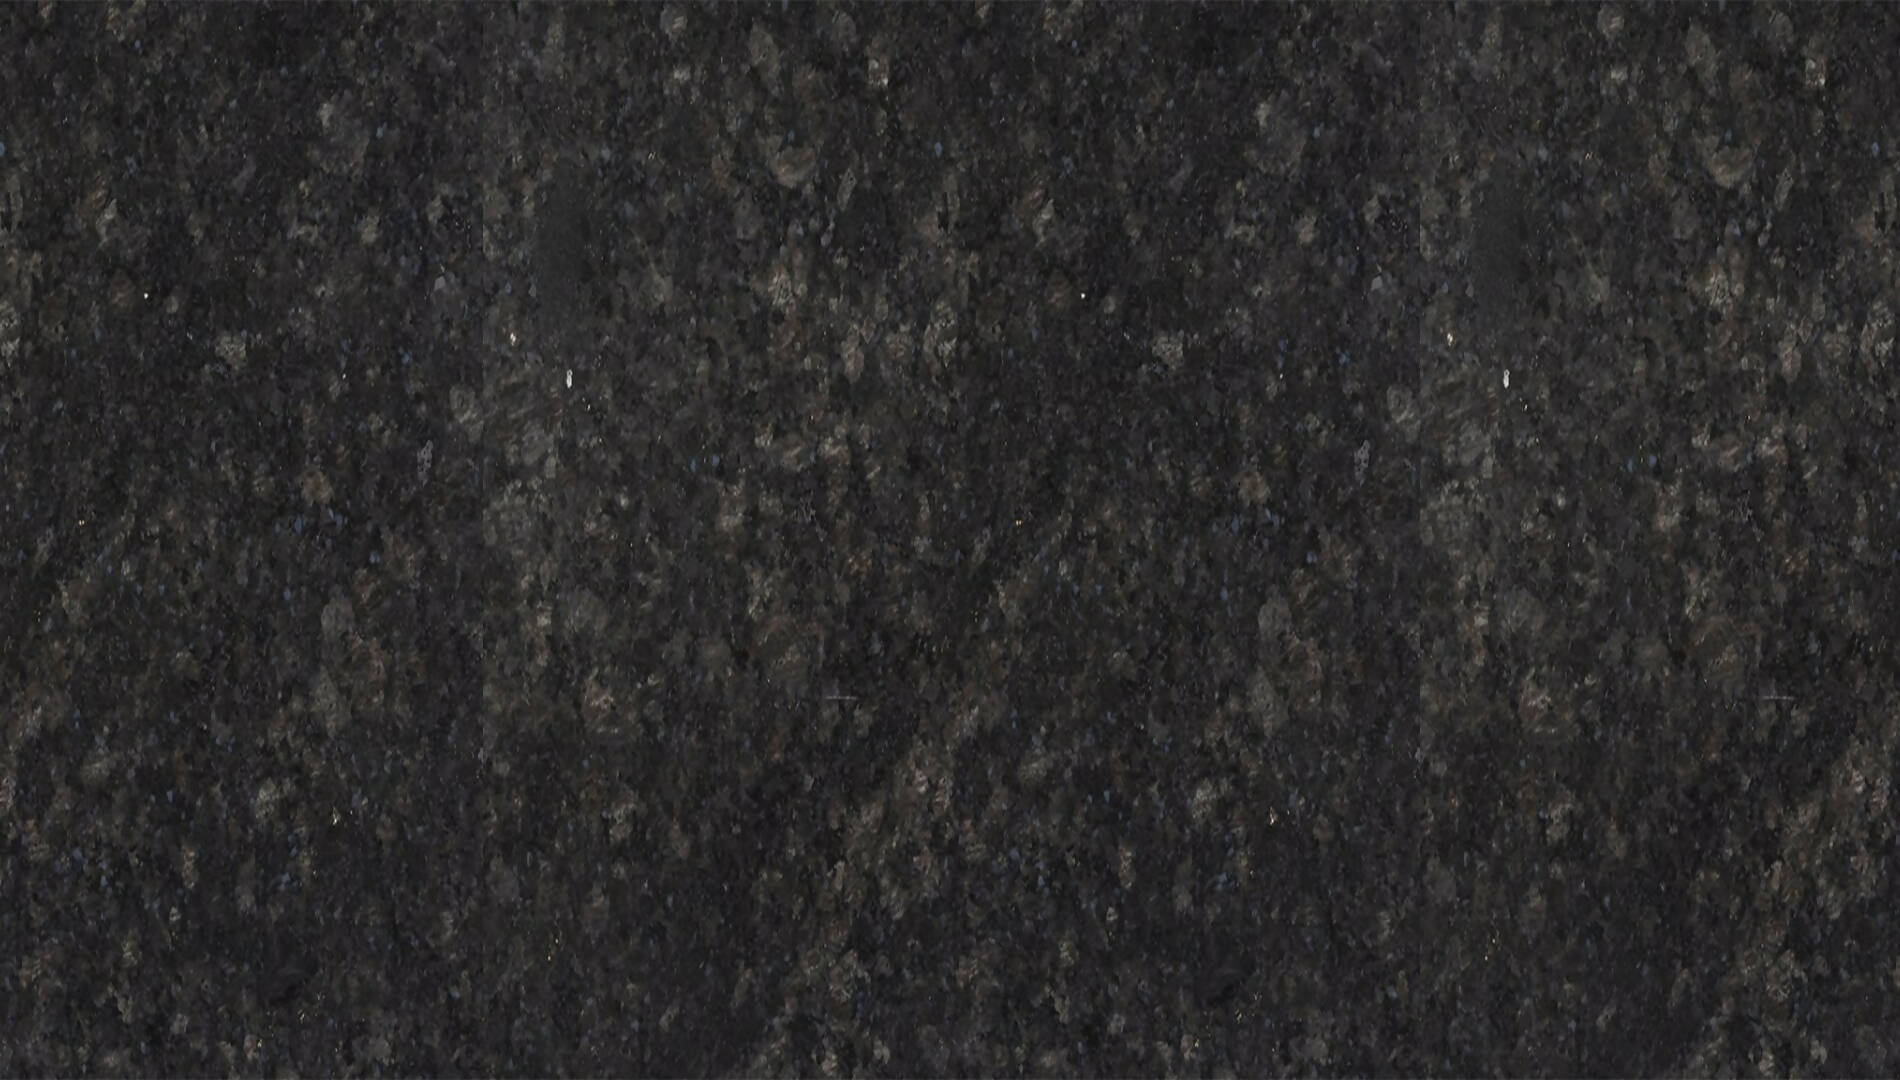 BLACK PEARL GRANITE,Granite,Worldwide Stone Ltd,www.work-tops.com